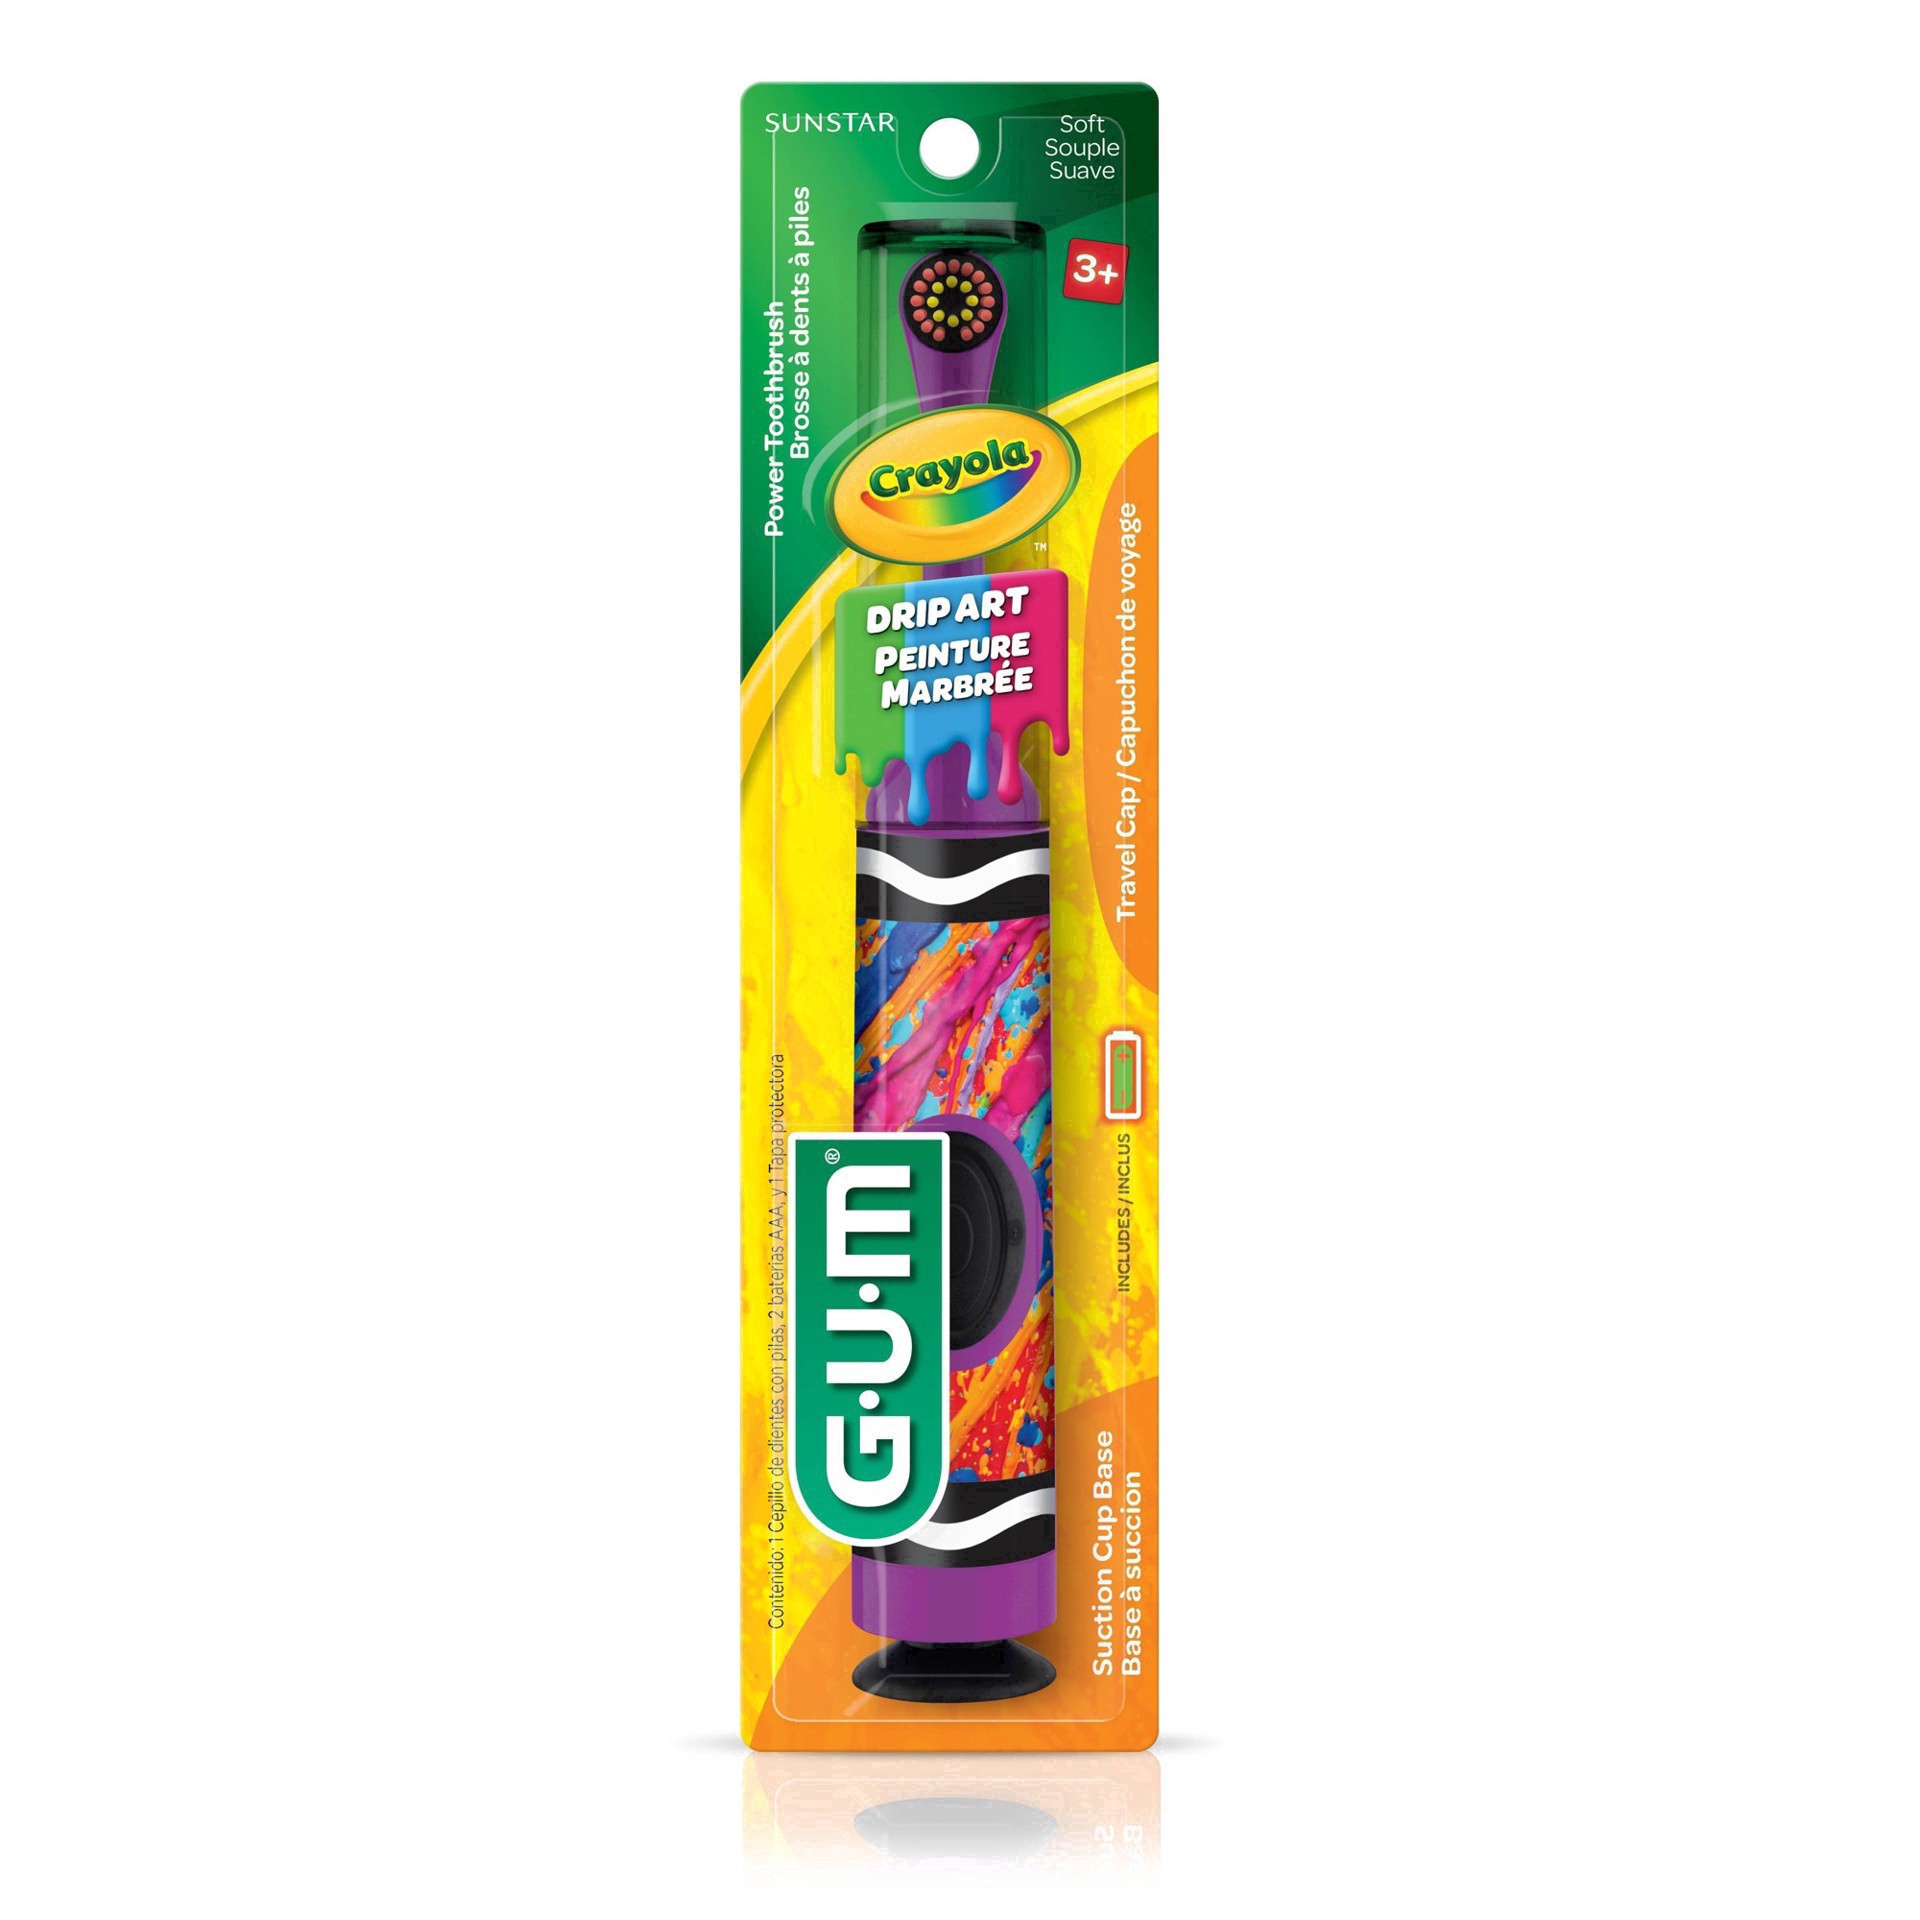 slide 34 of 50, G-U-M Crayola Electric Toothbrush, 1 ct